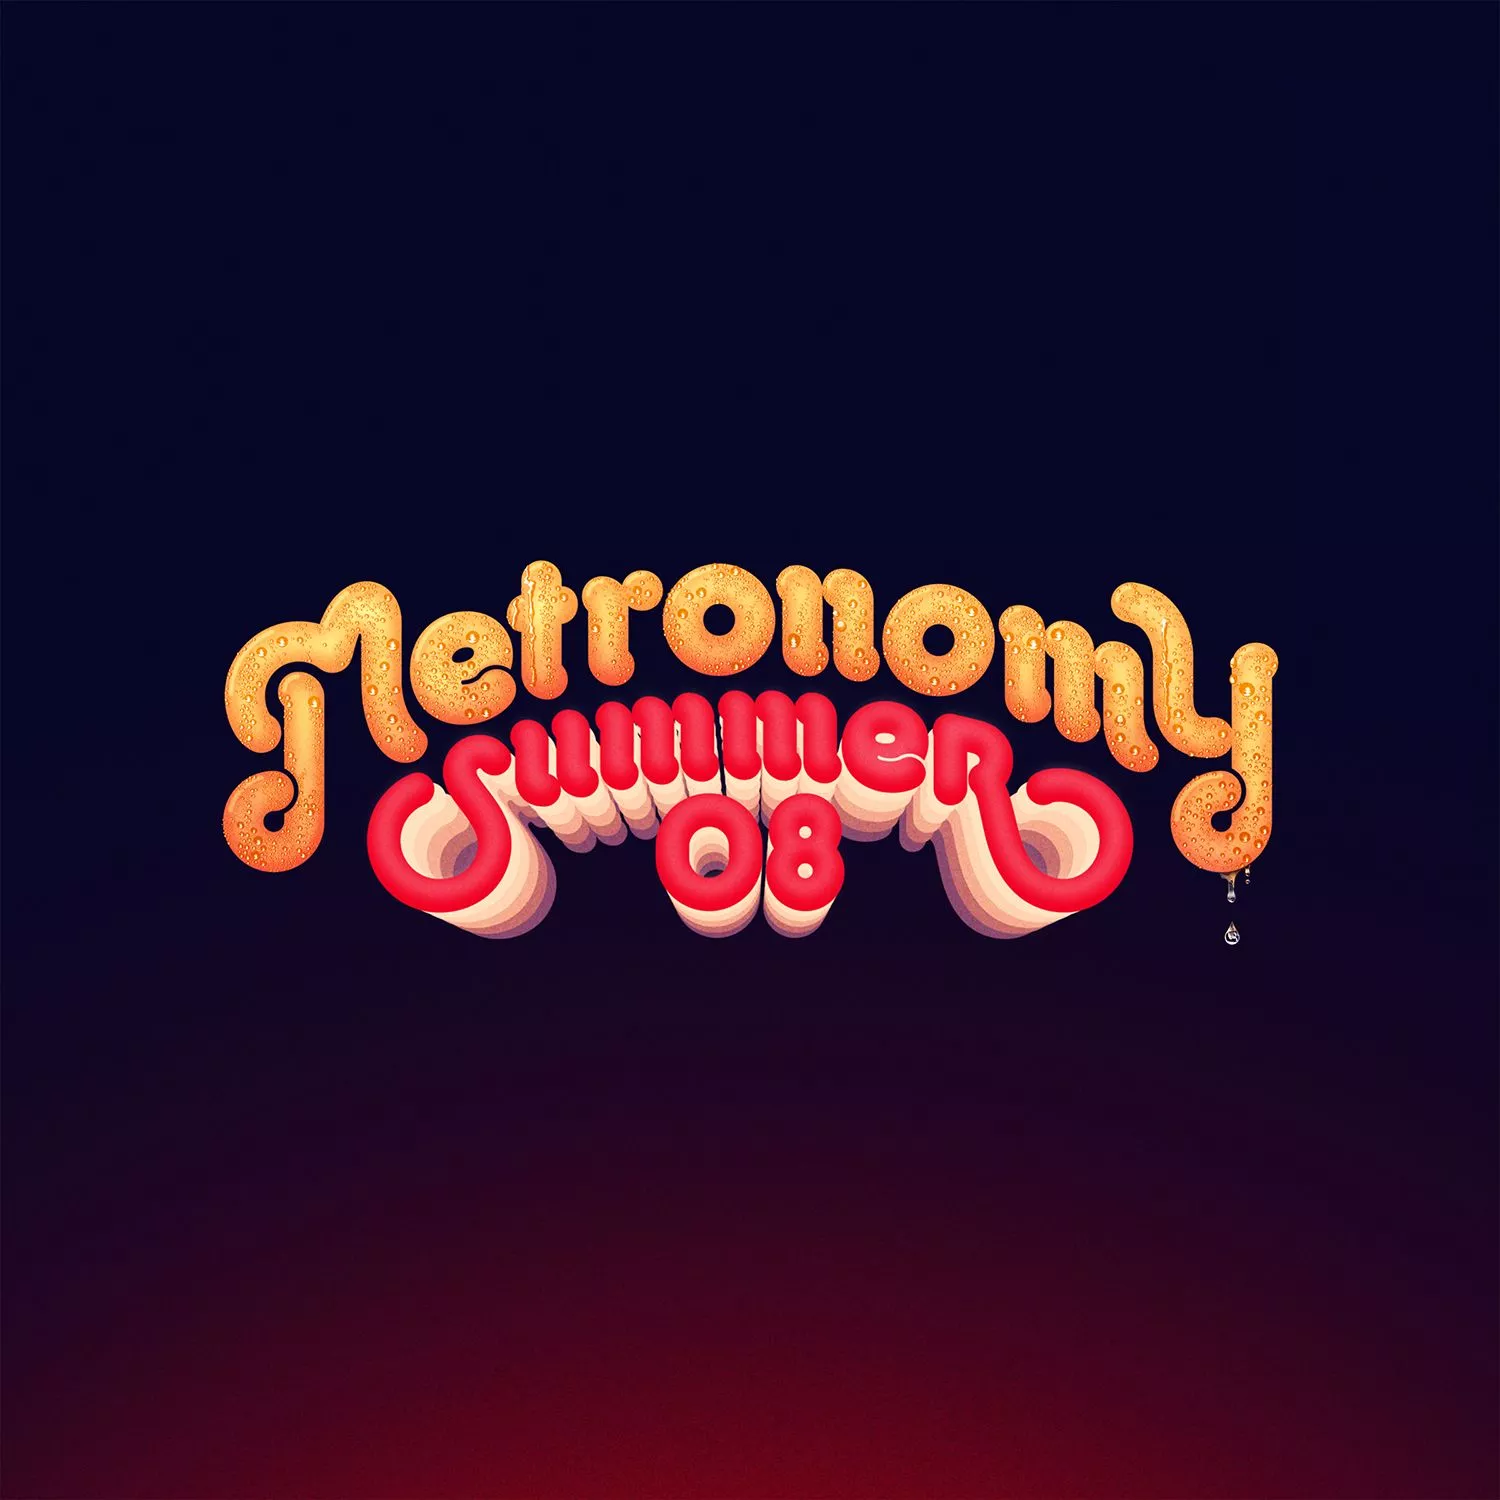 Summer 08 - Metronomy